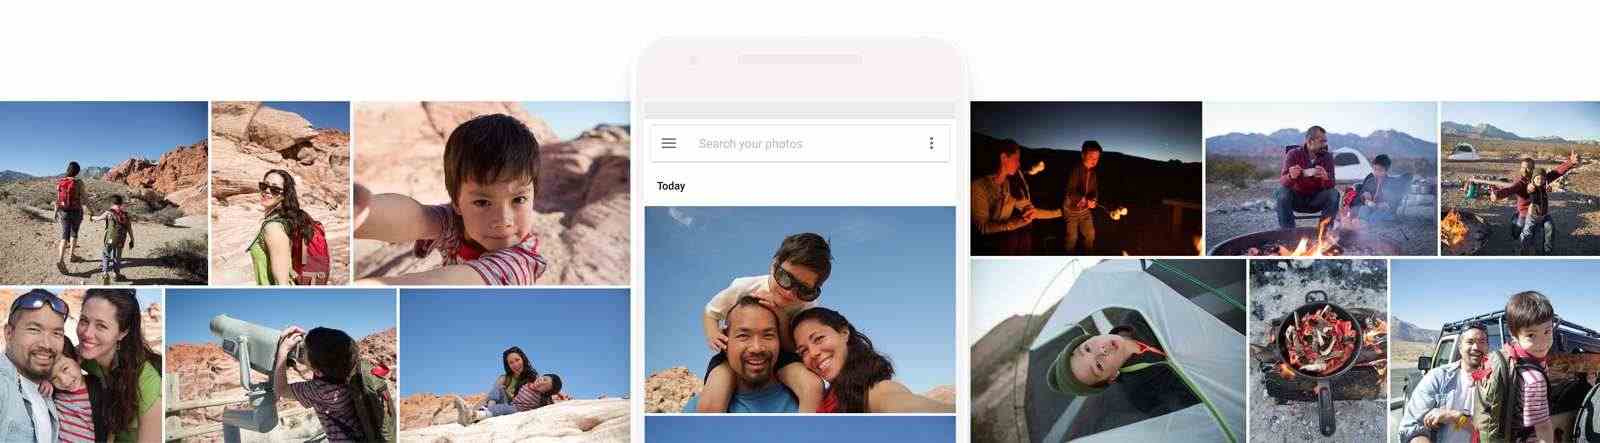 Google обновила приложения Gboard и Photos.